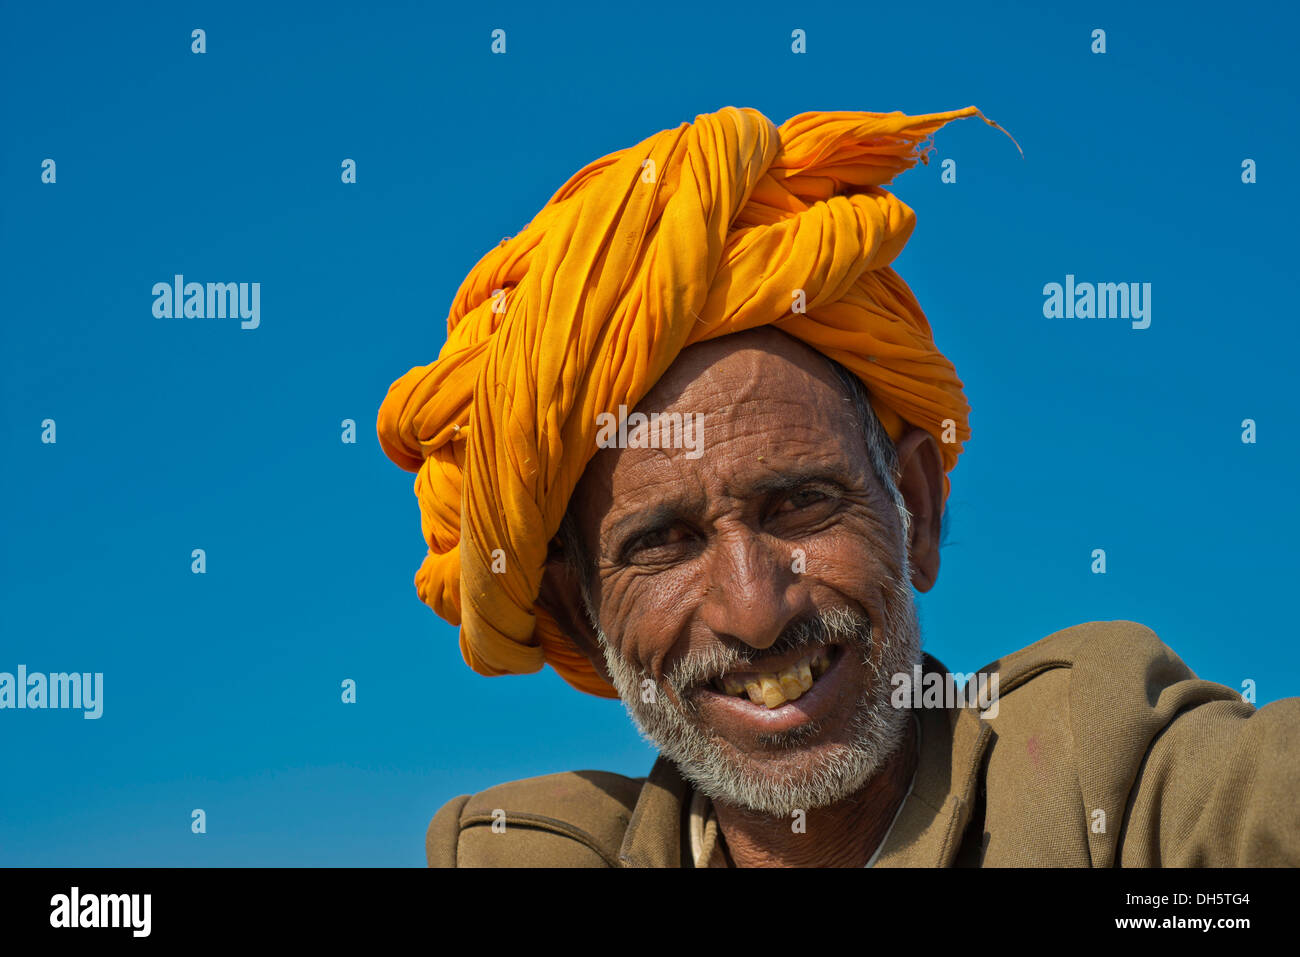 Un Hombre Con Un Turbante Amarillo Imagen editorial - Imagen de cara,  amarillo: 41109855